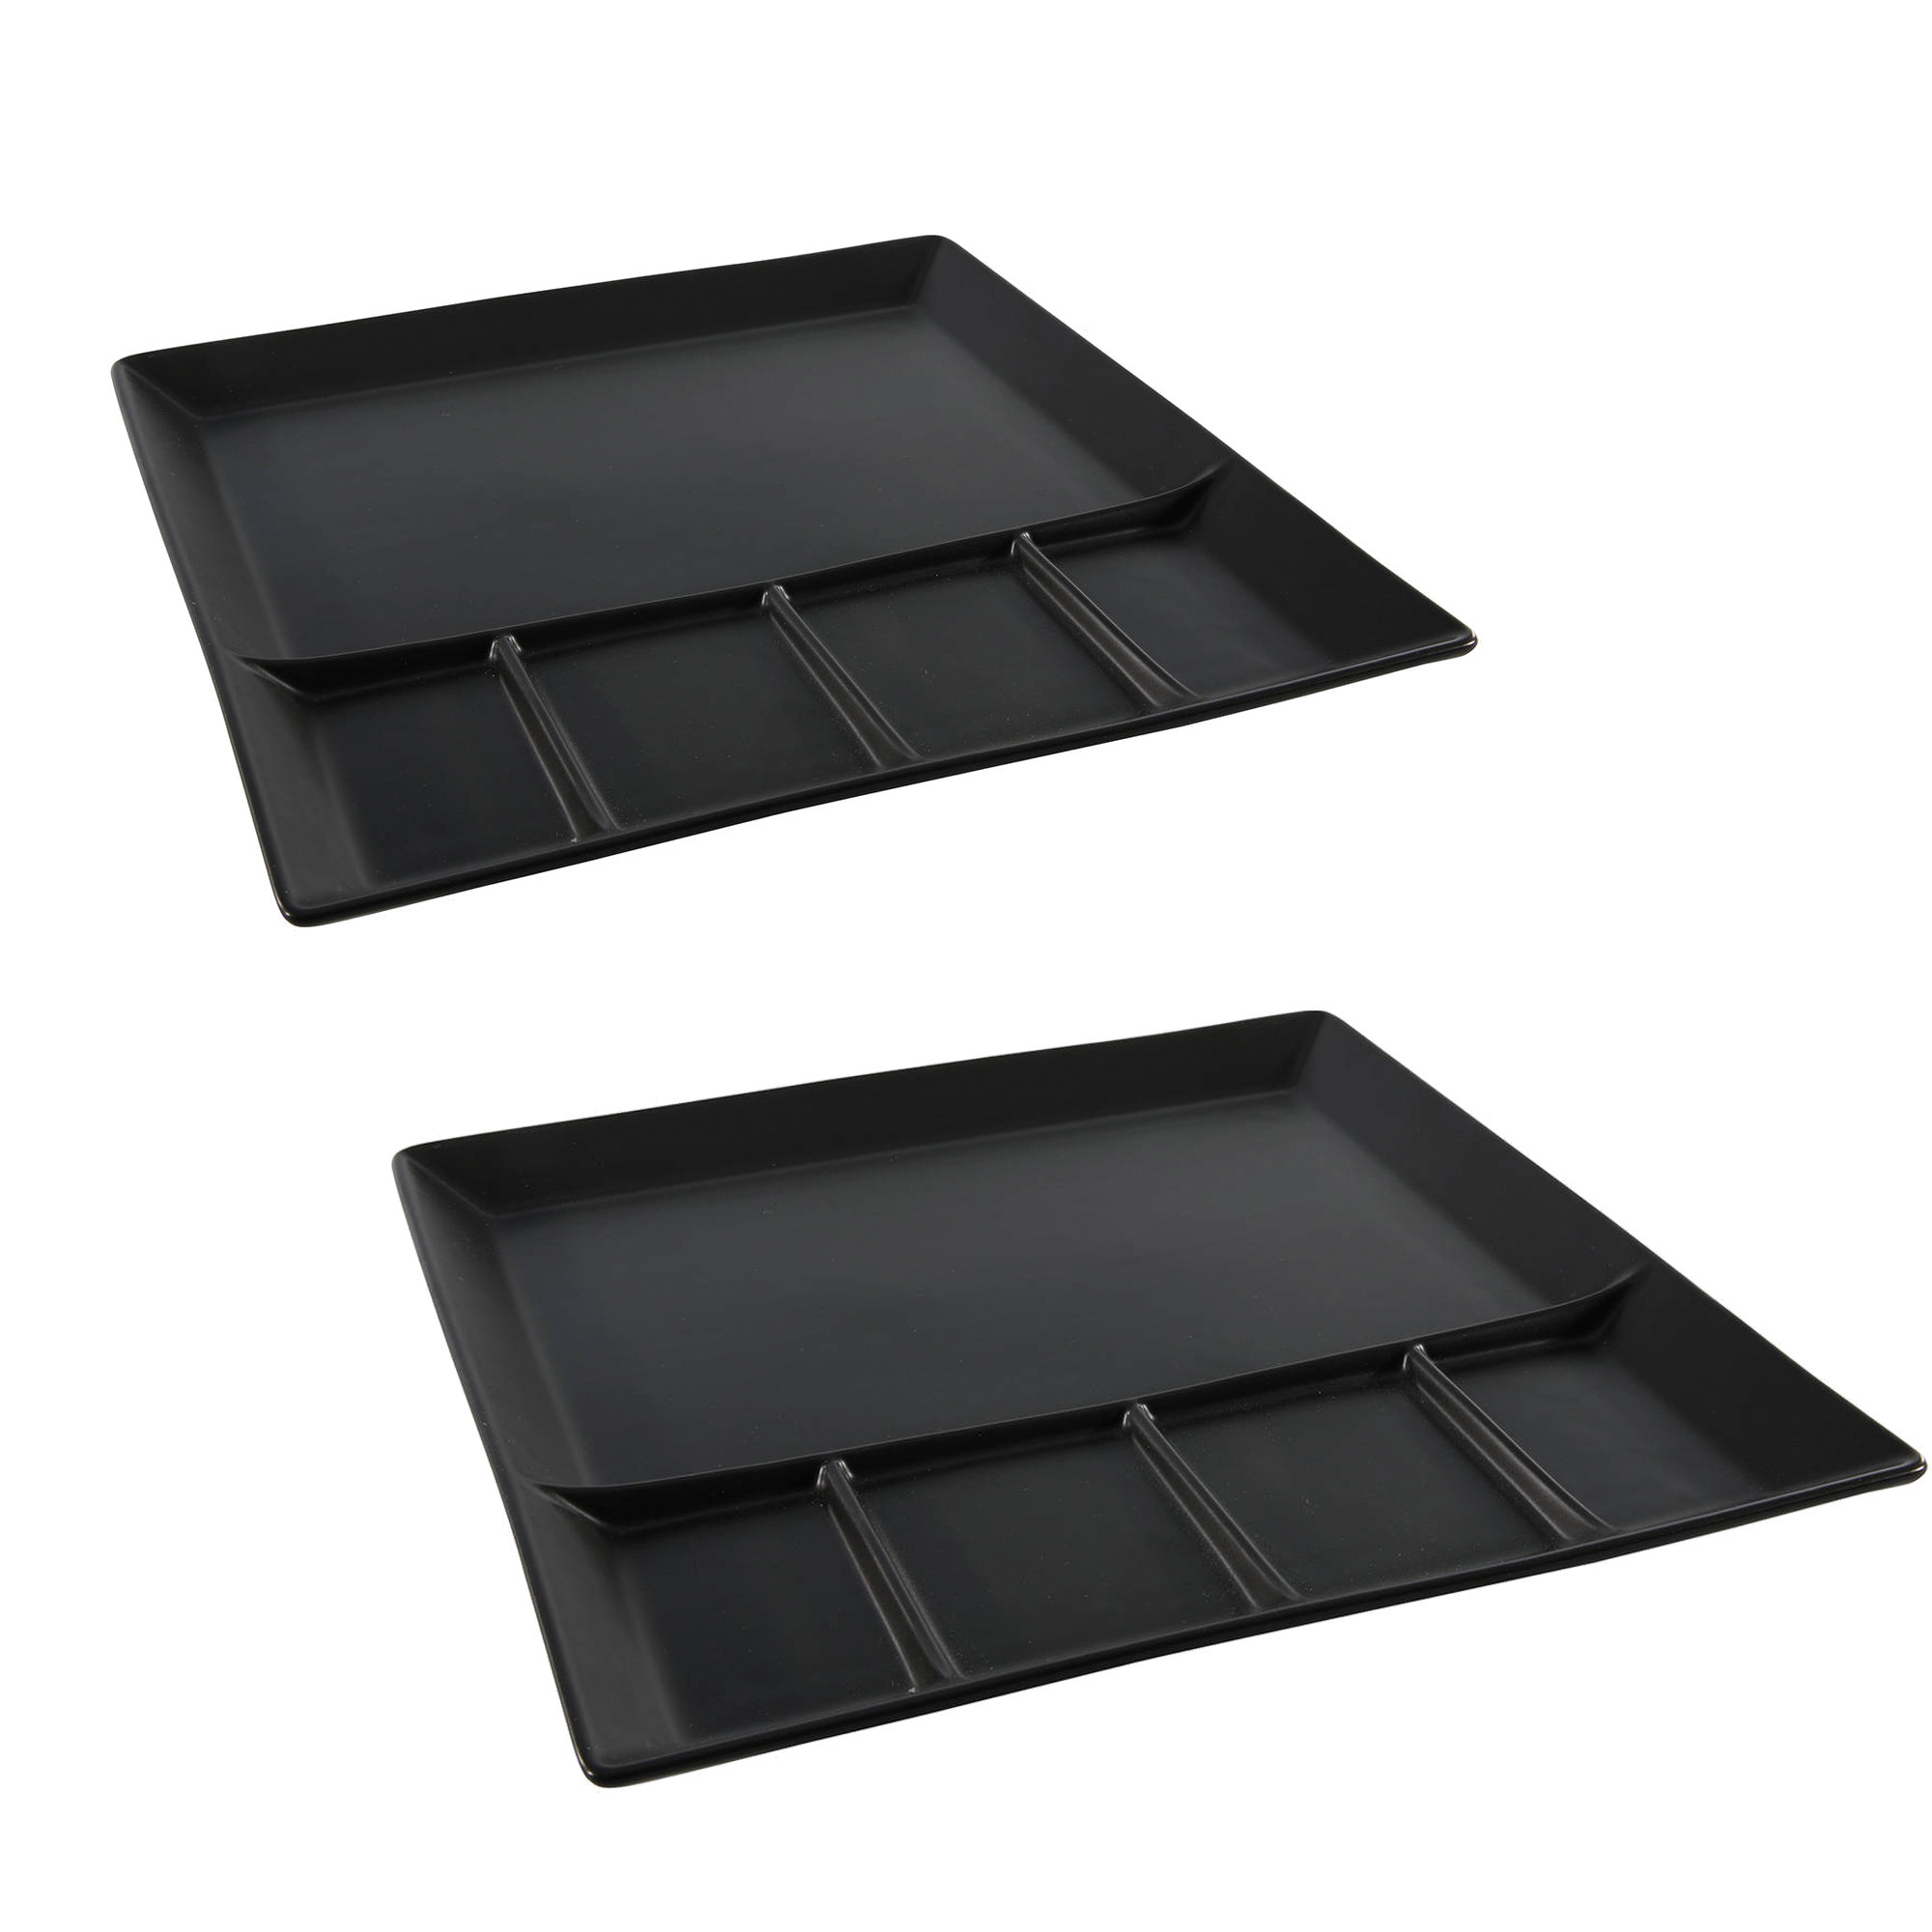 2x stuks mat zwart fondue-gourmet bord 5-vaks vierkant aardewerk 24 cm